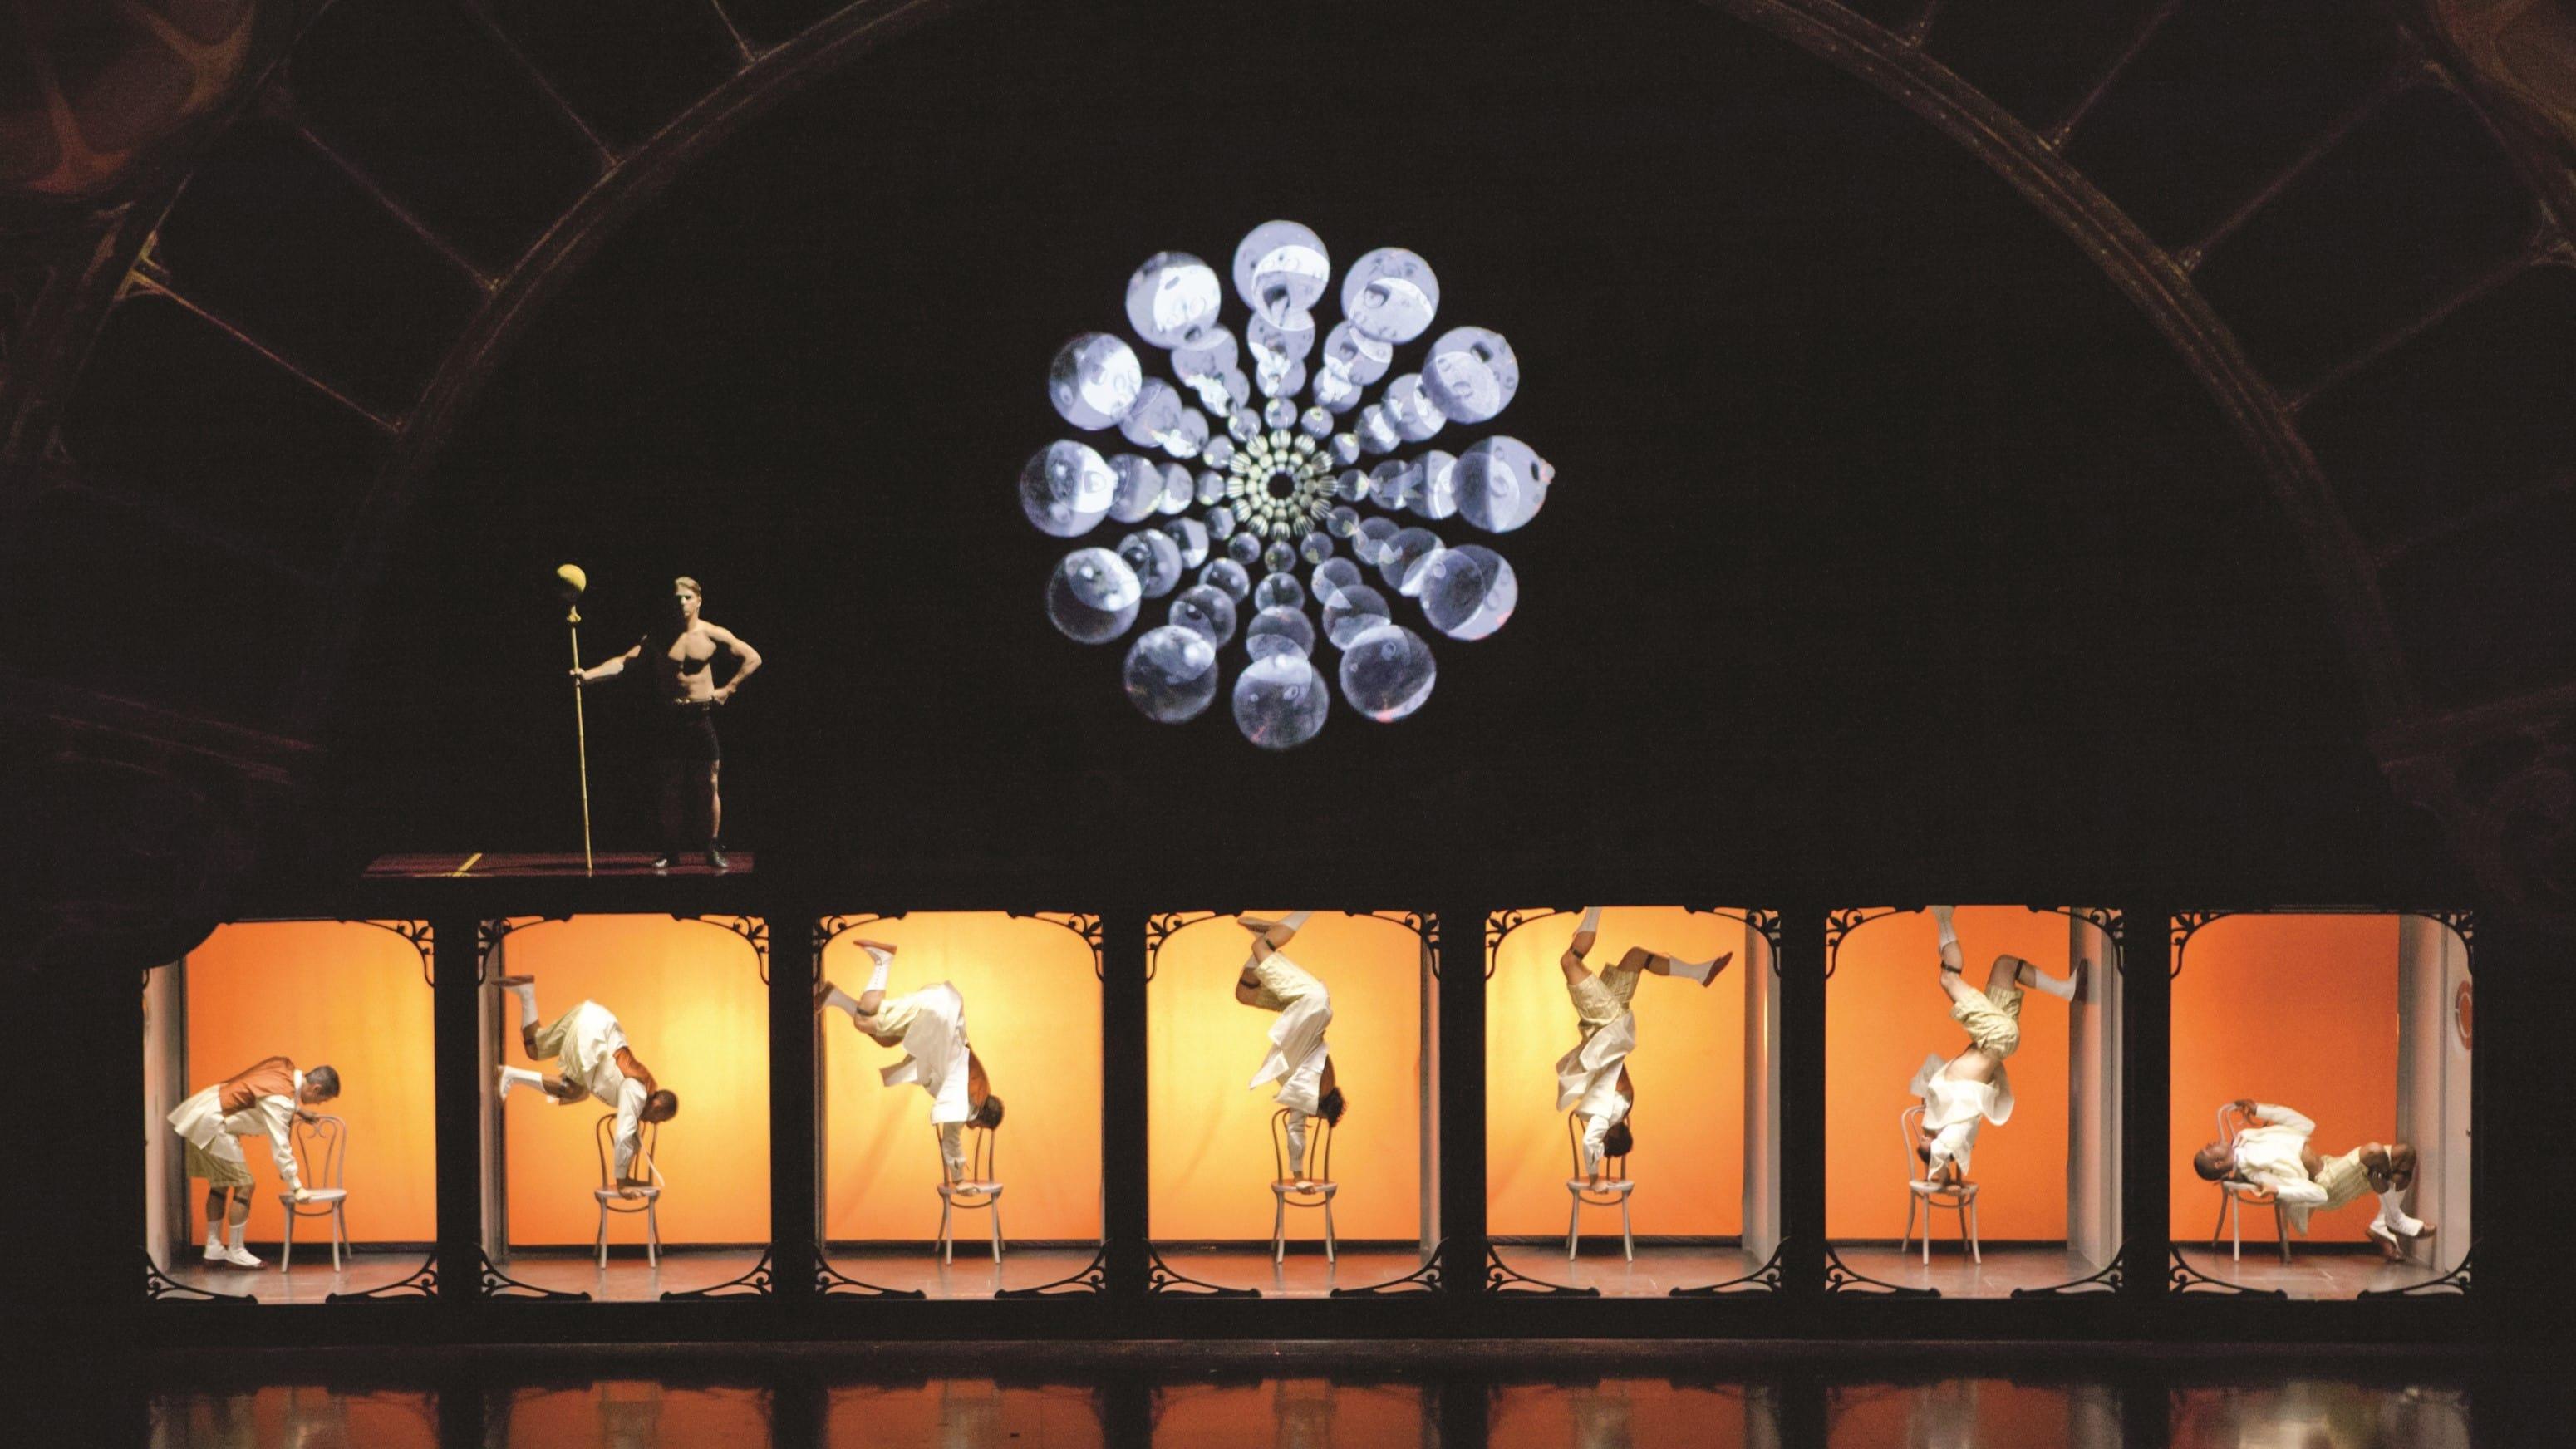 Cirque du Soleil: IRIS backdrop